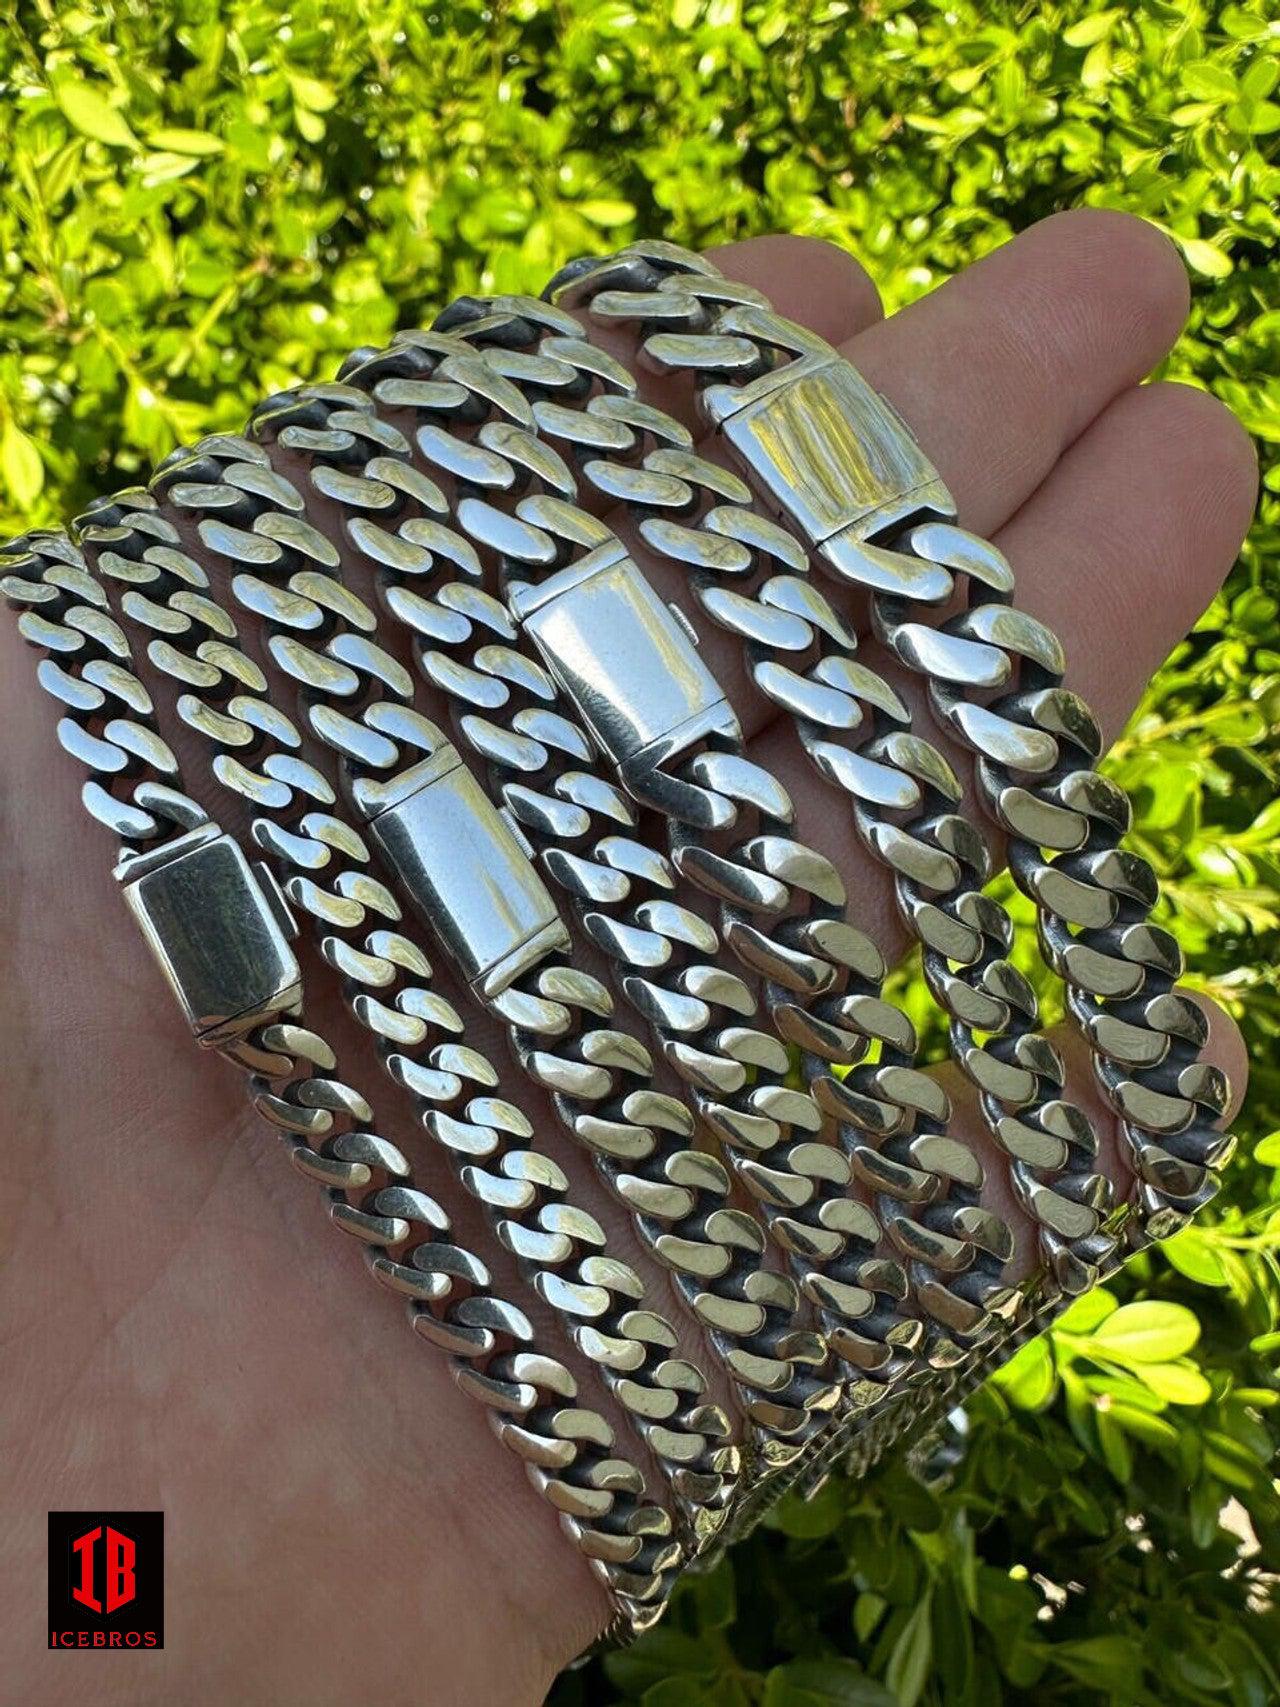 Miami Cuban Link Bracelet Box Lock 925 Silver Rhodium Coated (6-12mm)